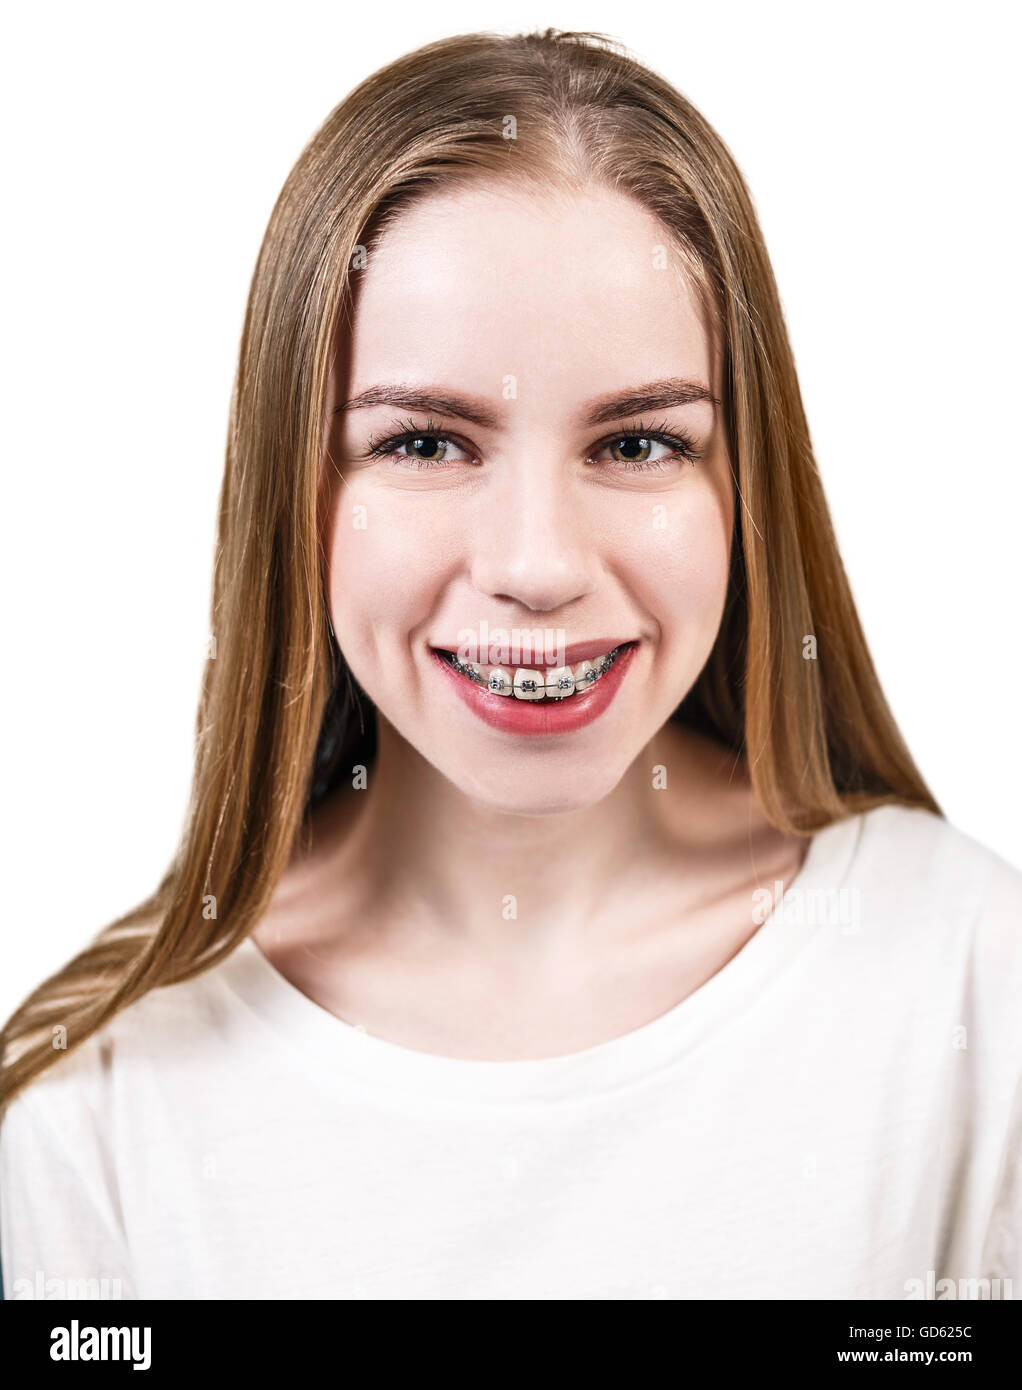 Beautiful woman with braces on teeth Stock Photo - Alamy